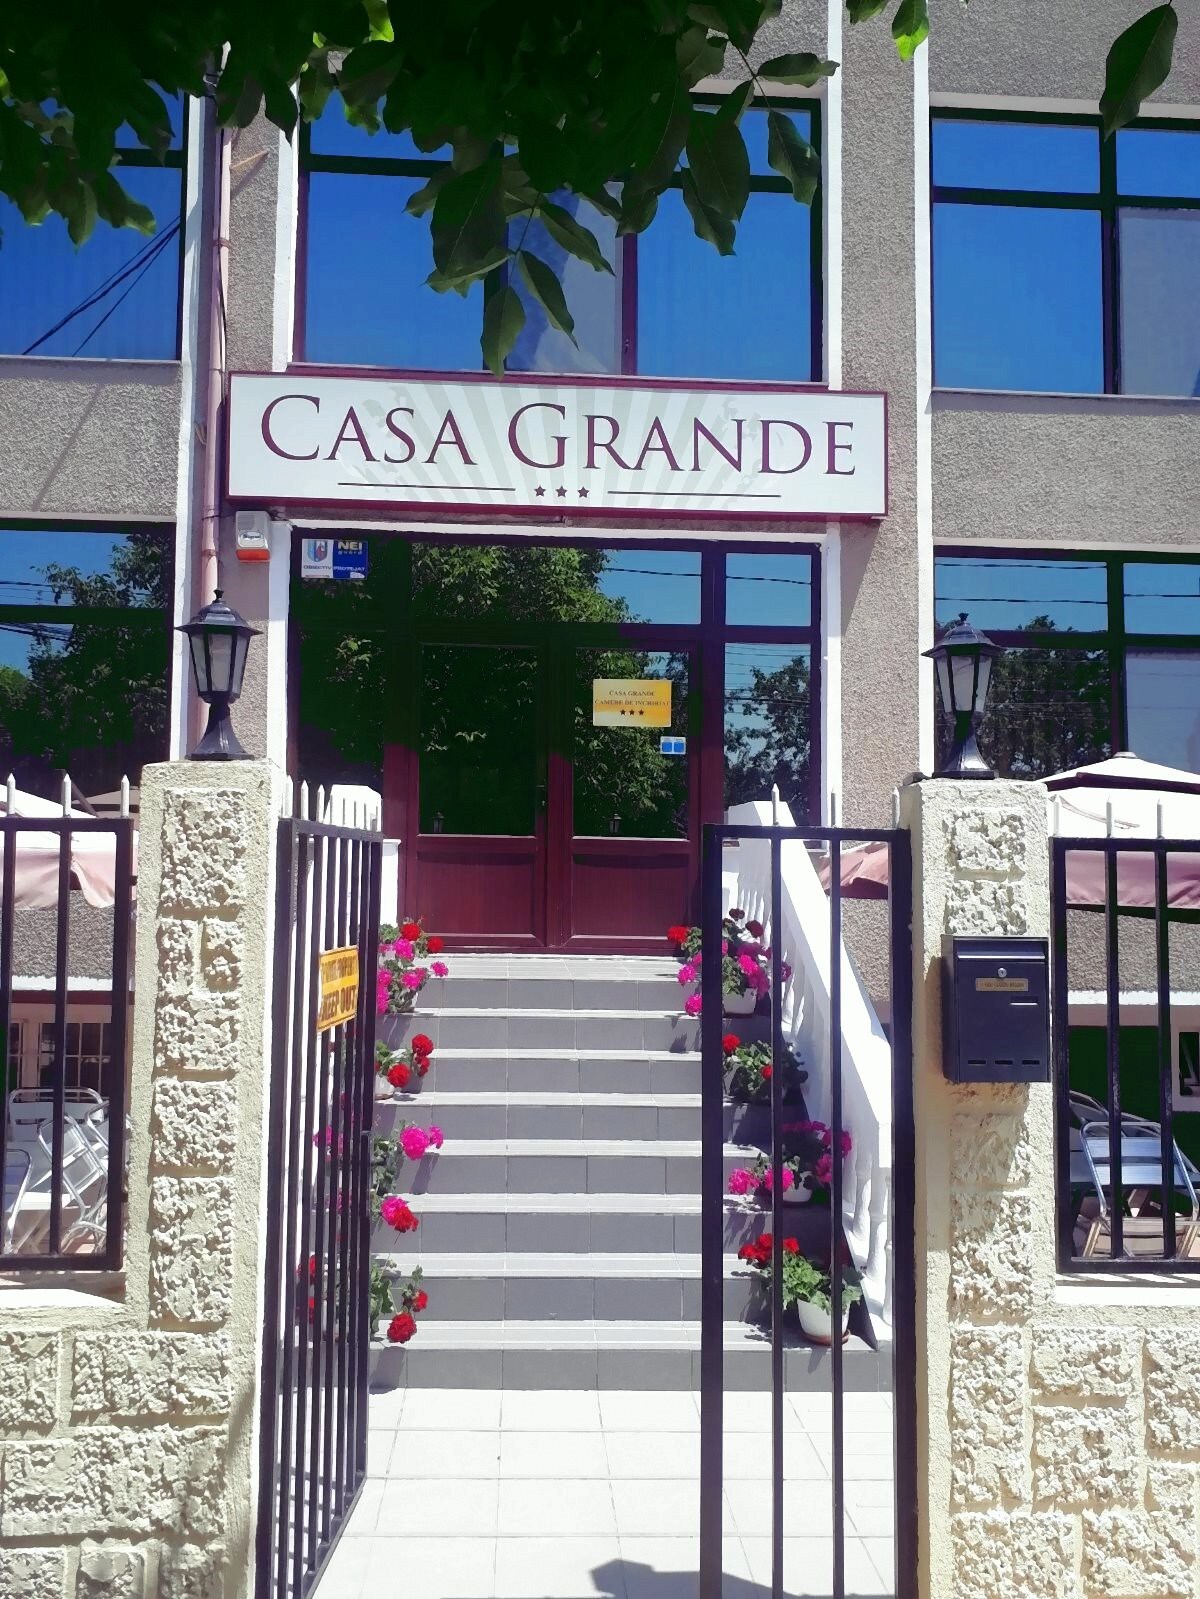 大卡萨(Casa Grande)